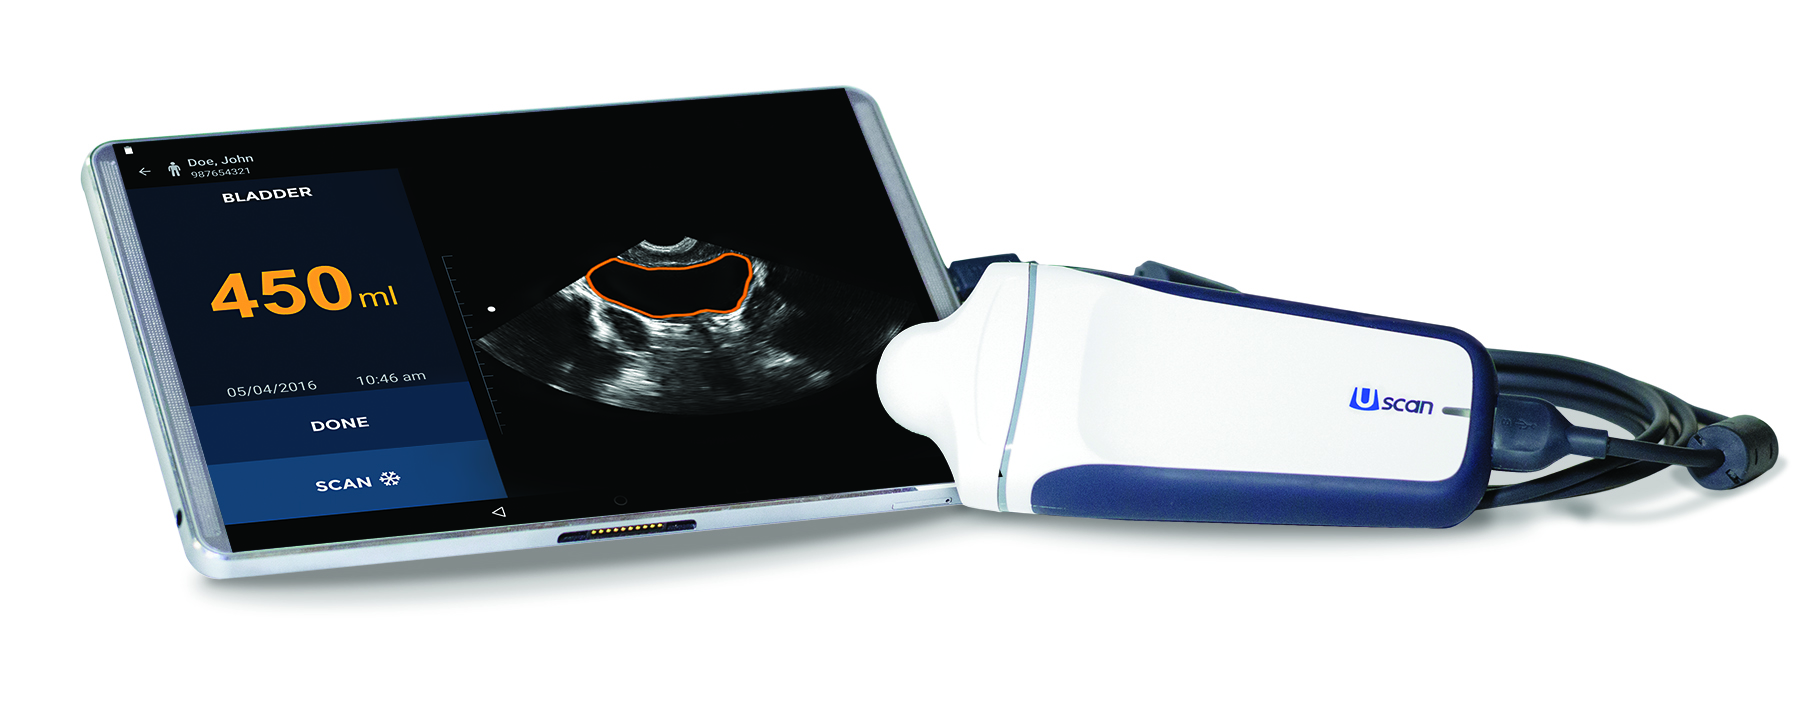 Signostics’ Uscan intelligent ultrasound tool